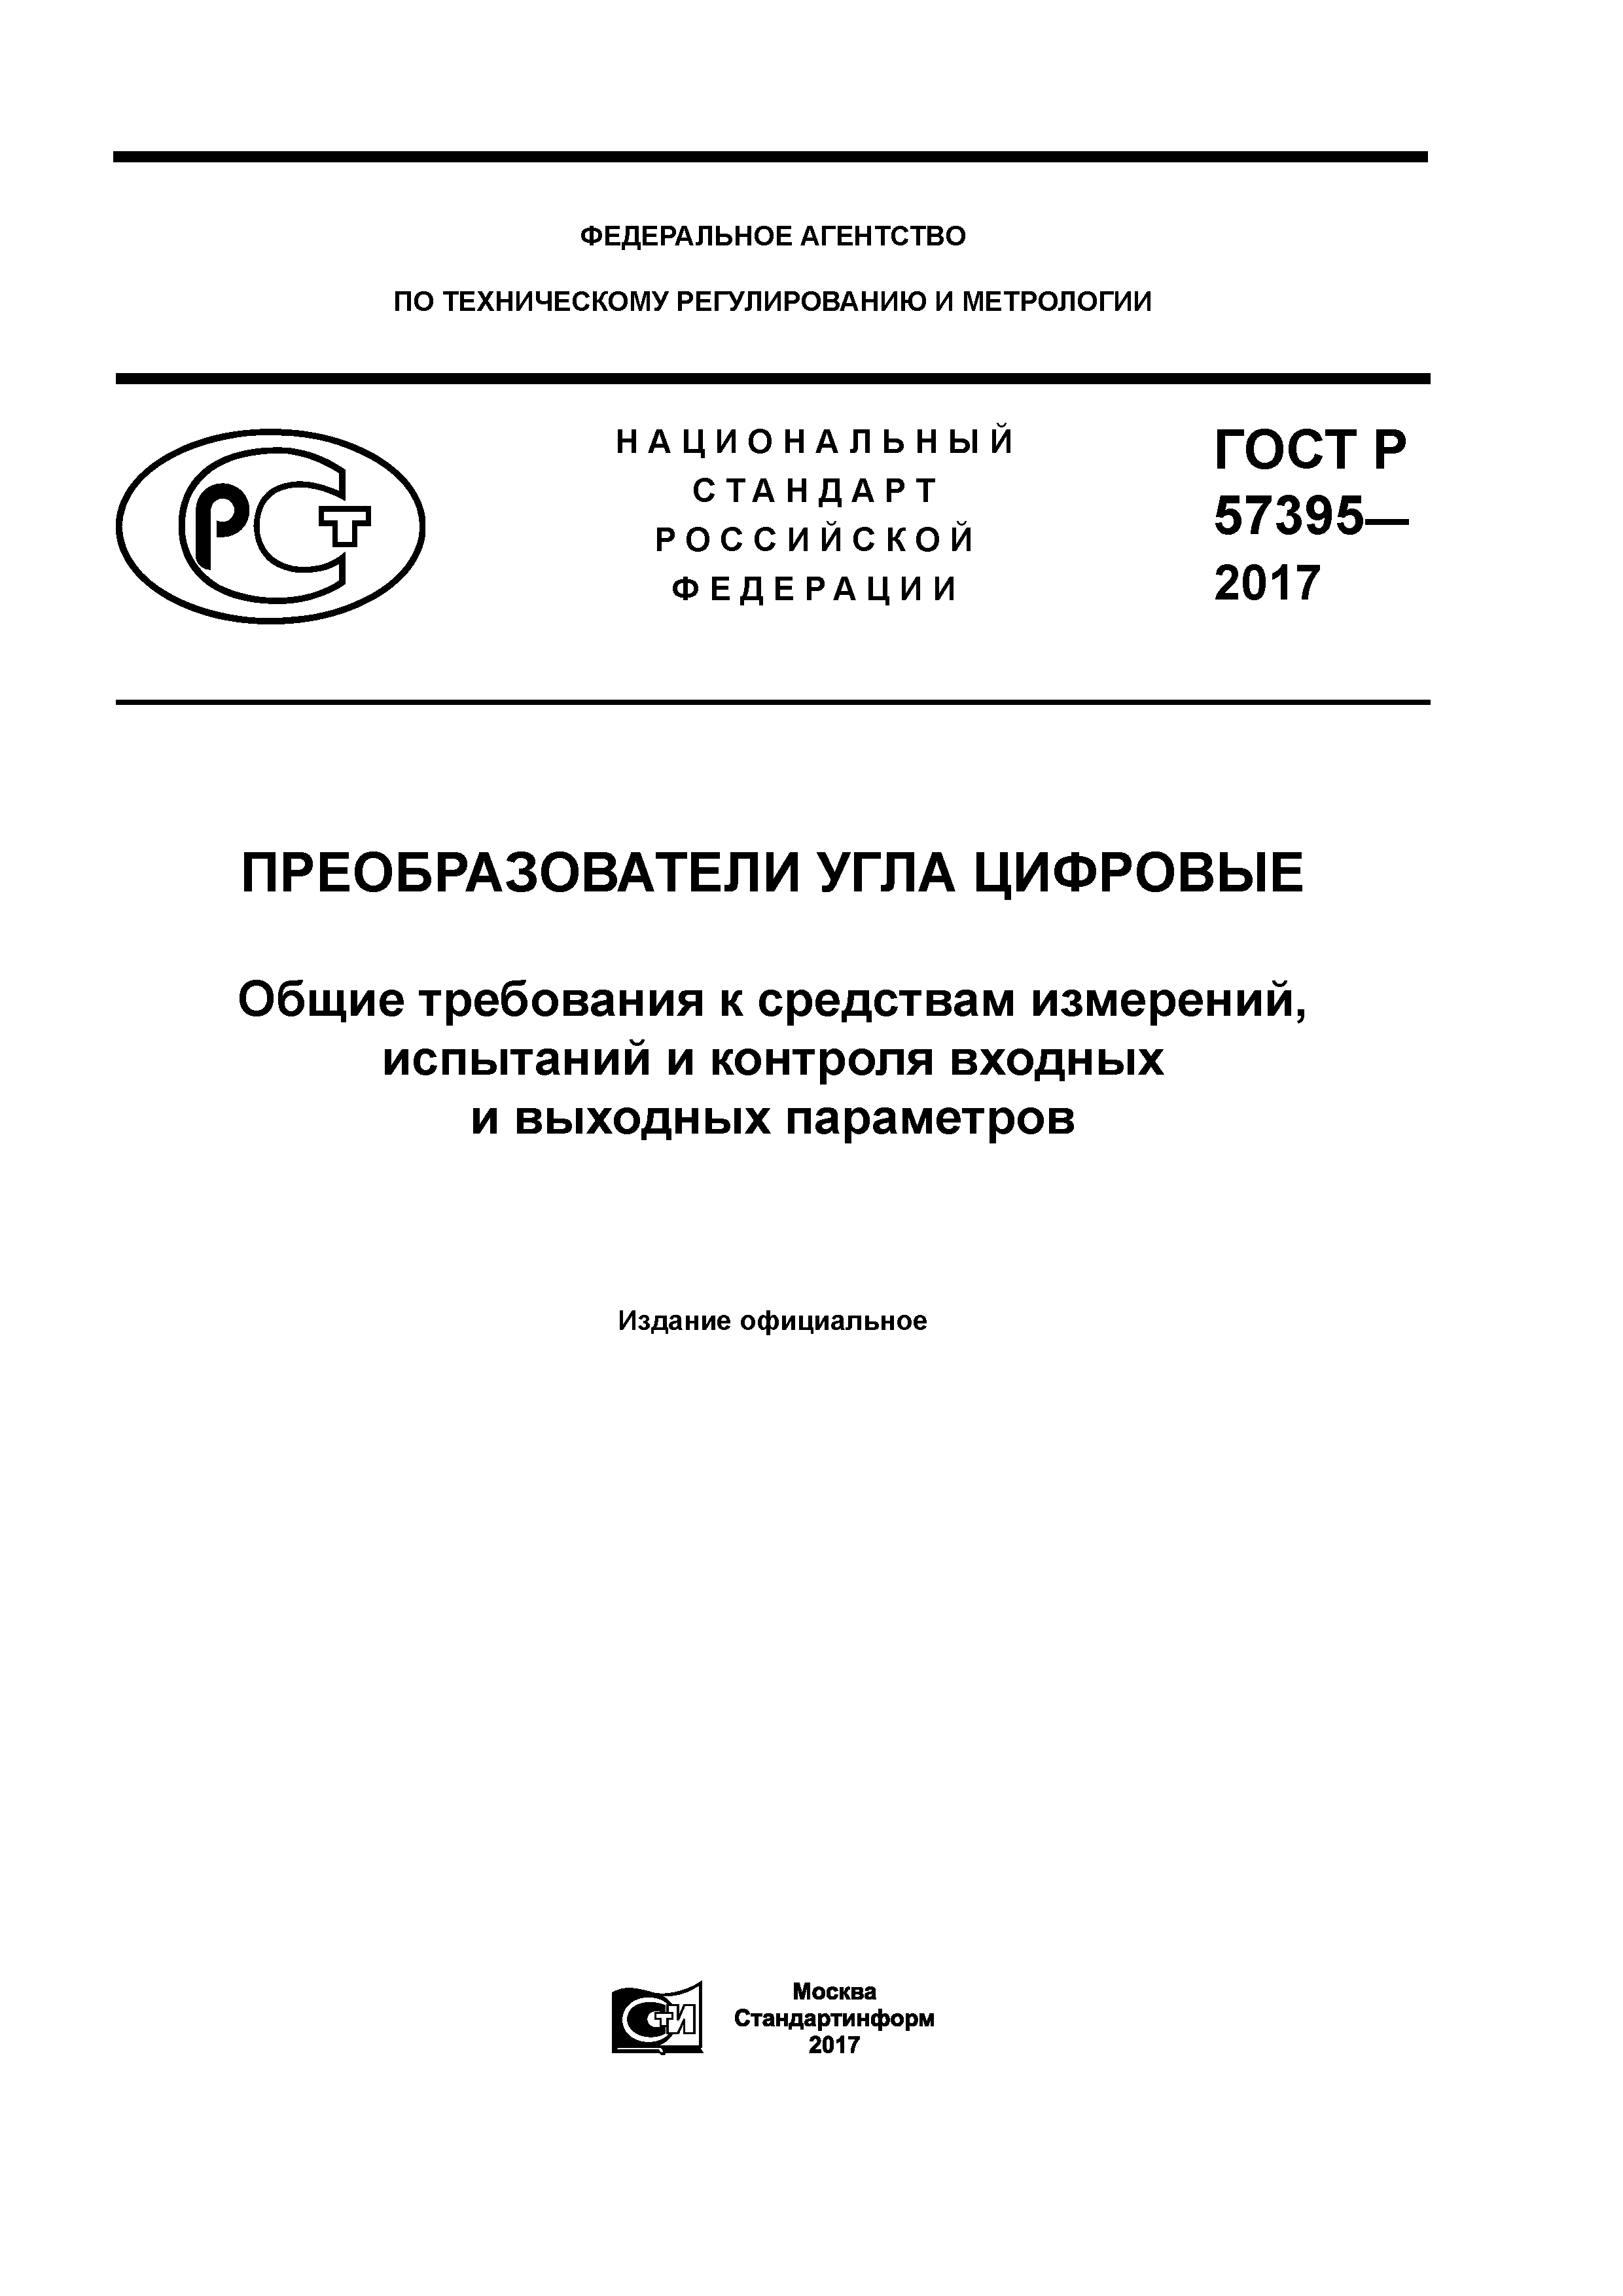 ГОСТ Р 57395-2017